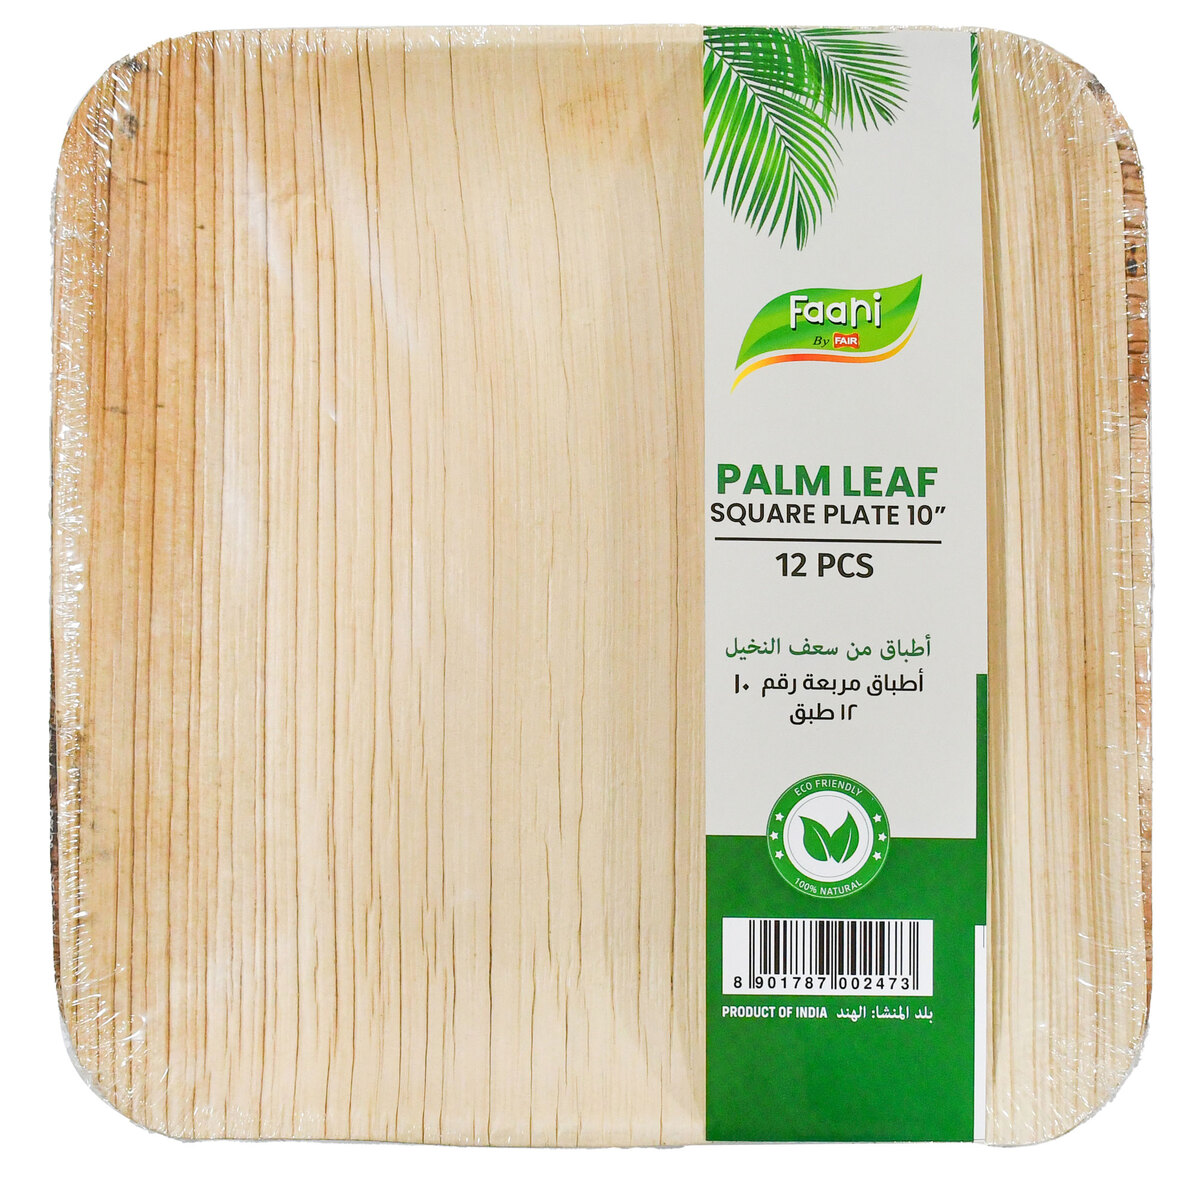 Faani Palm Leaf Square Plate 10" 12 pcs